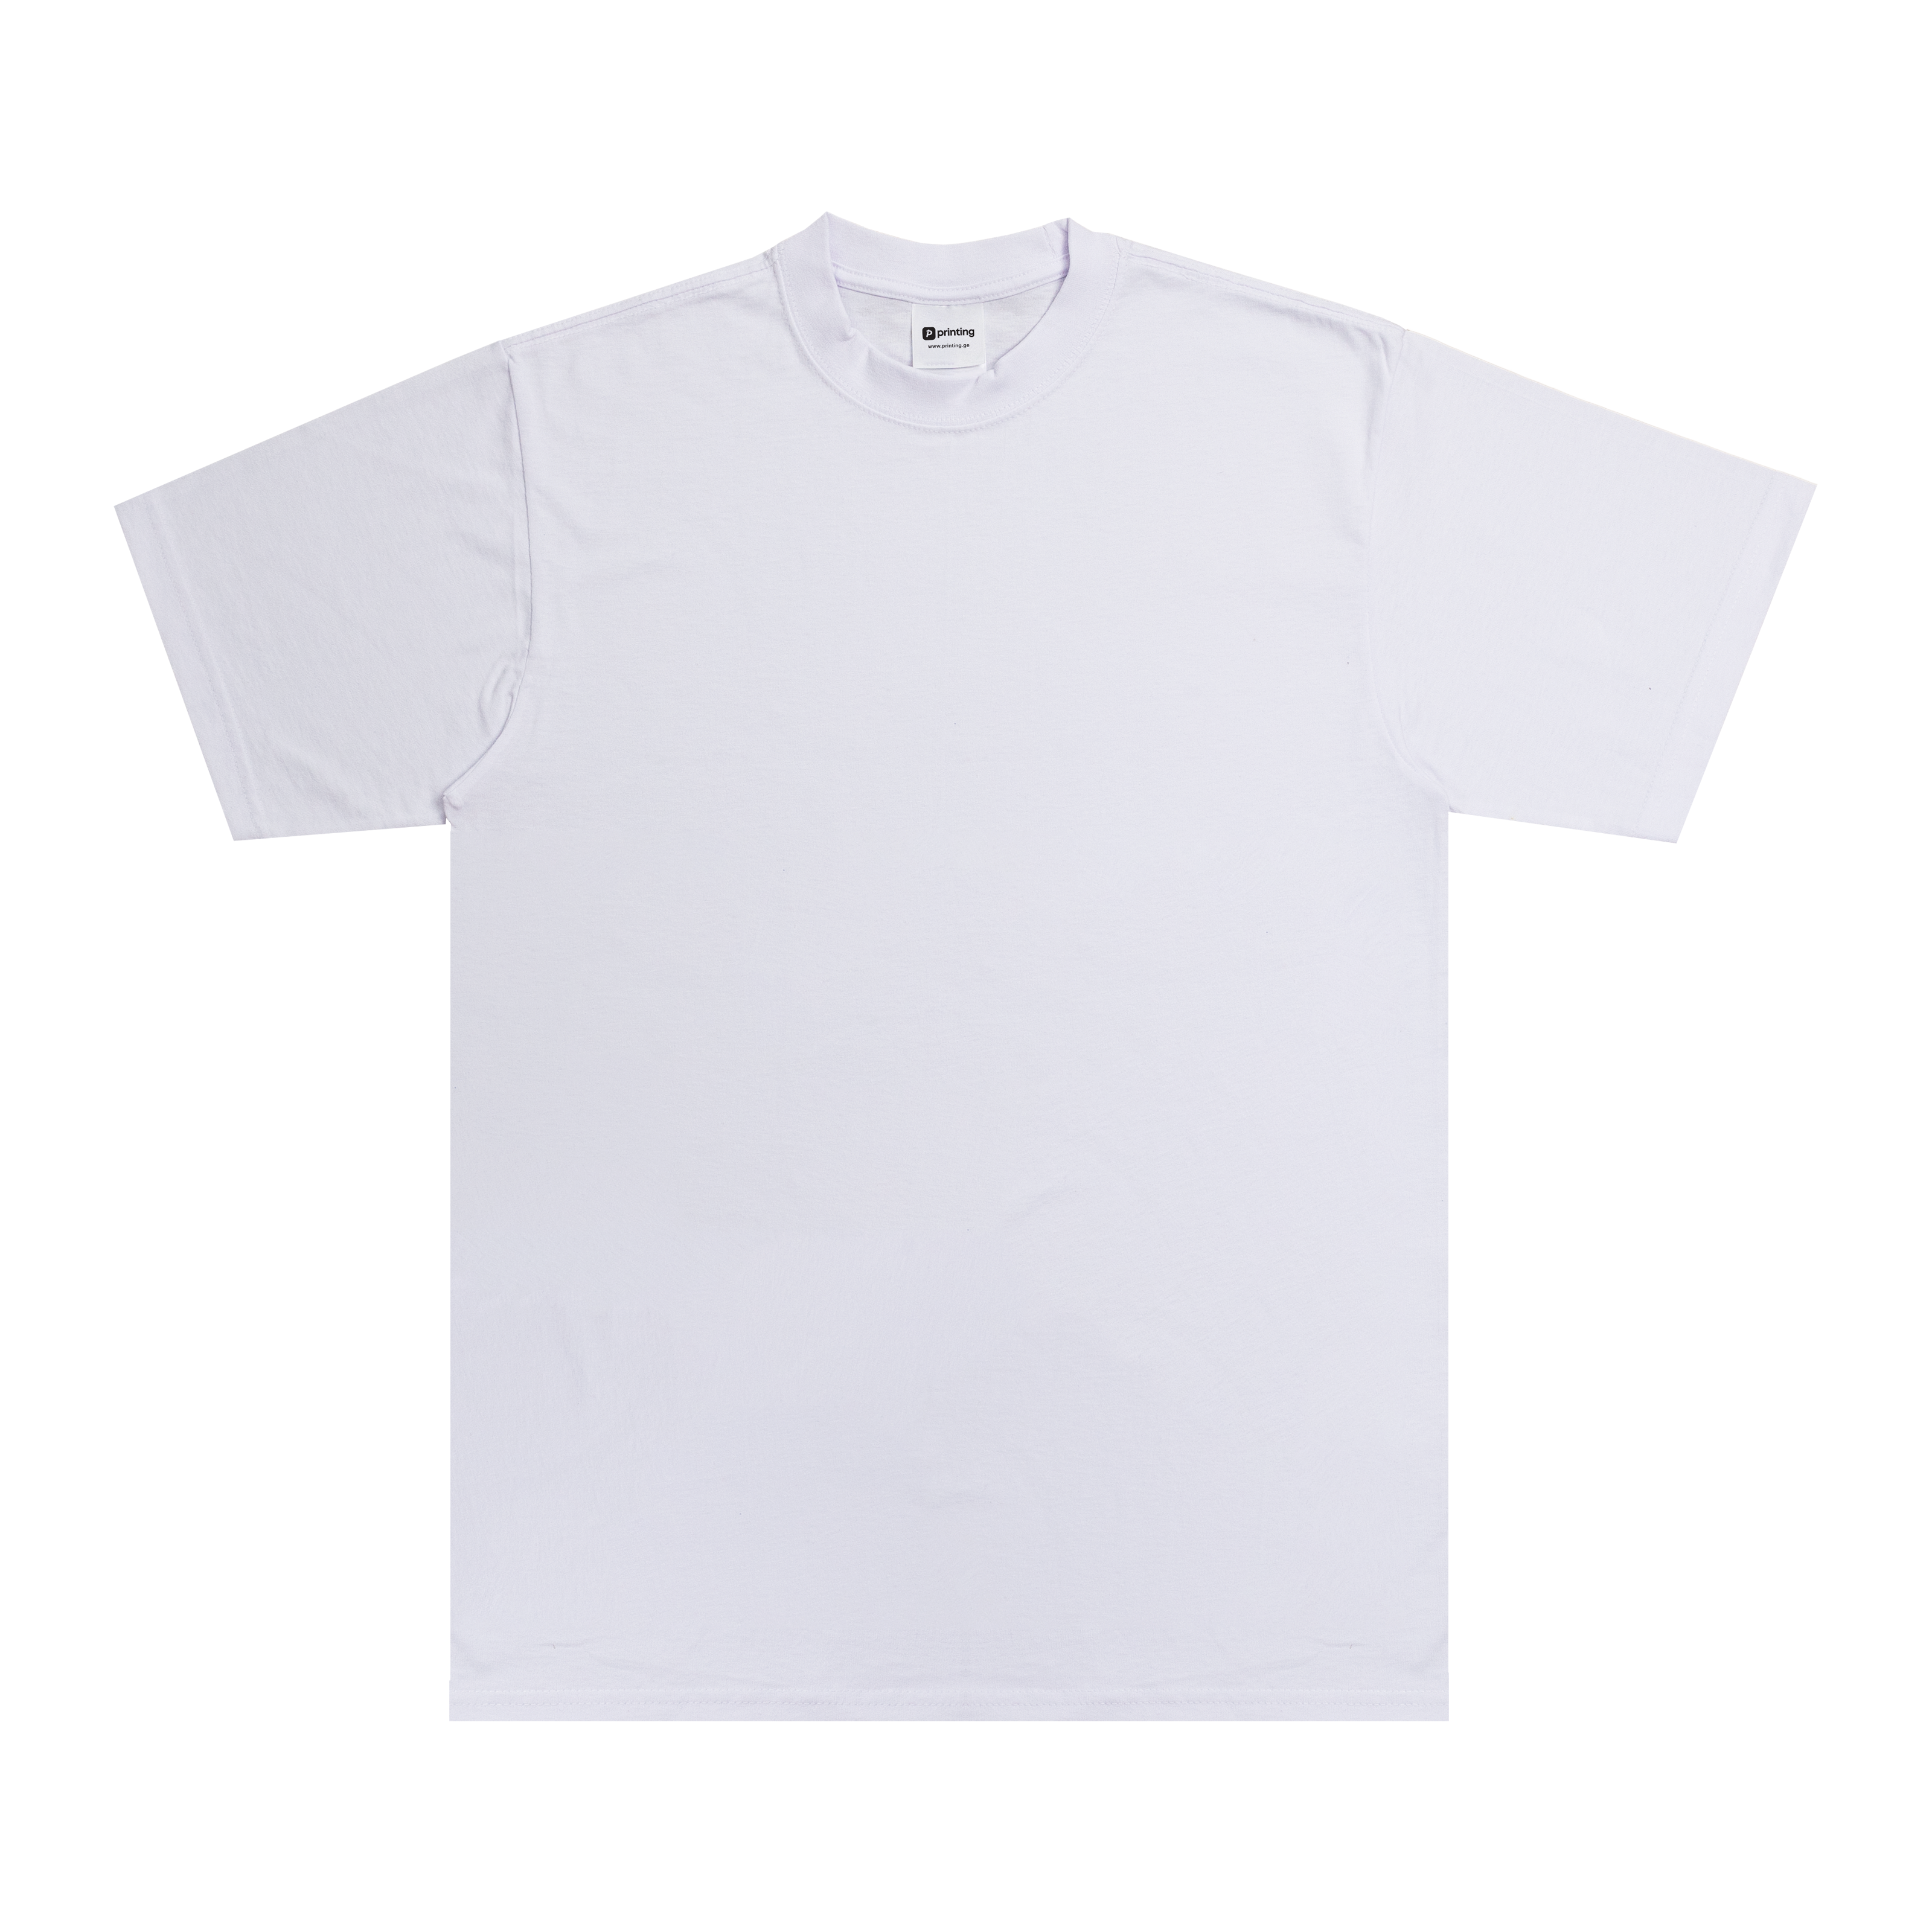 Max Heavyweight T-Shirt - Standard Size - White